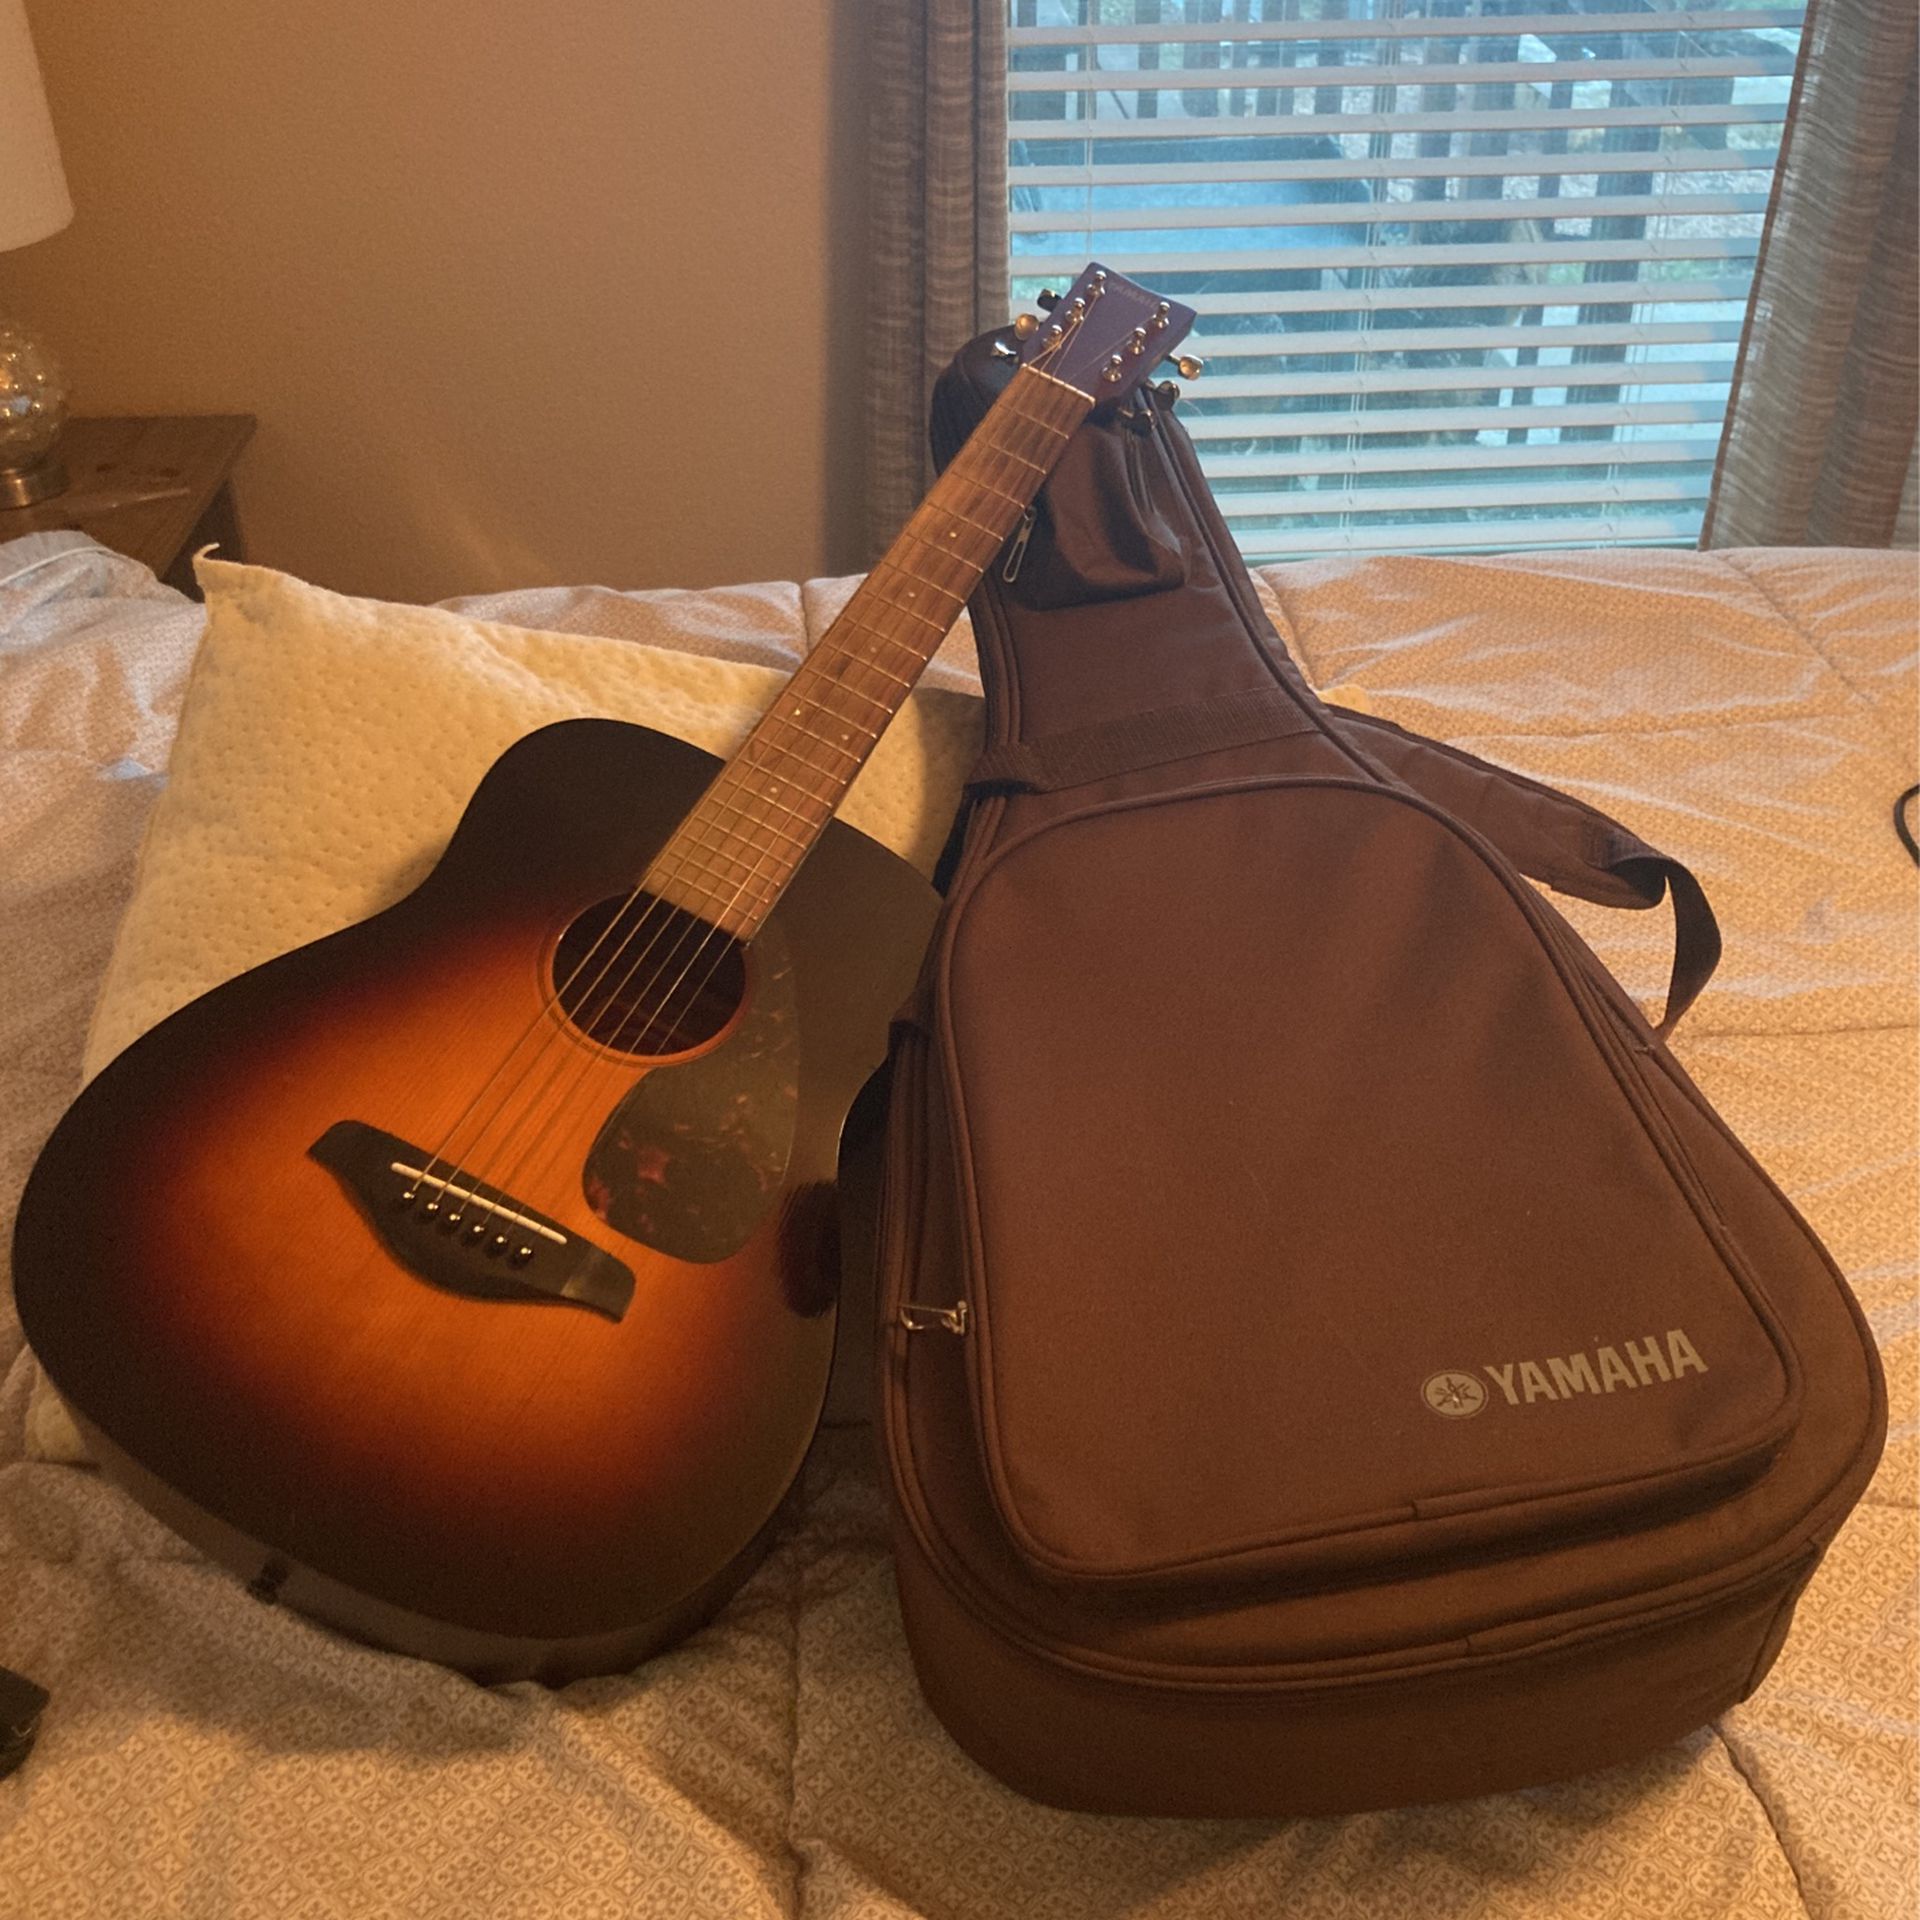 Acoustic Yamaha Guitar  Yamaha guitar backpack/case